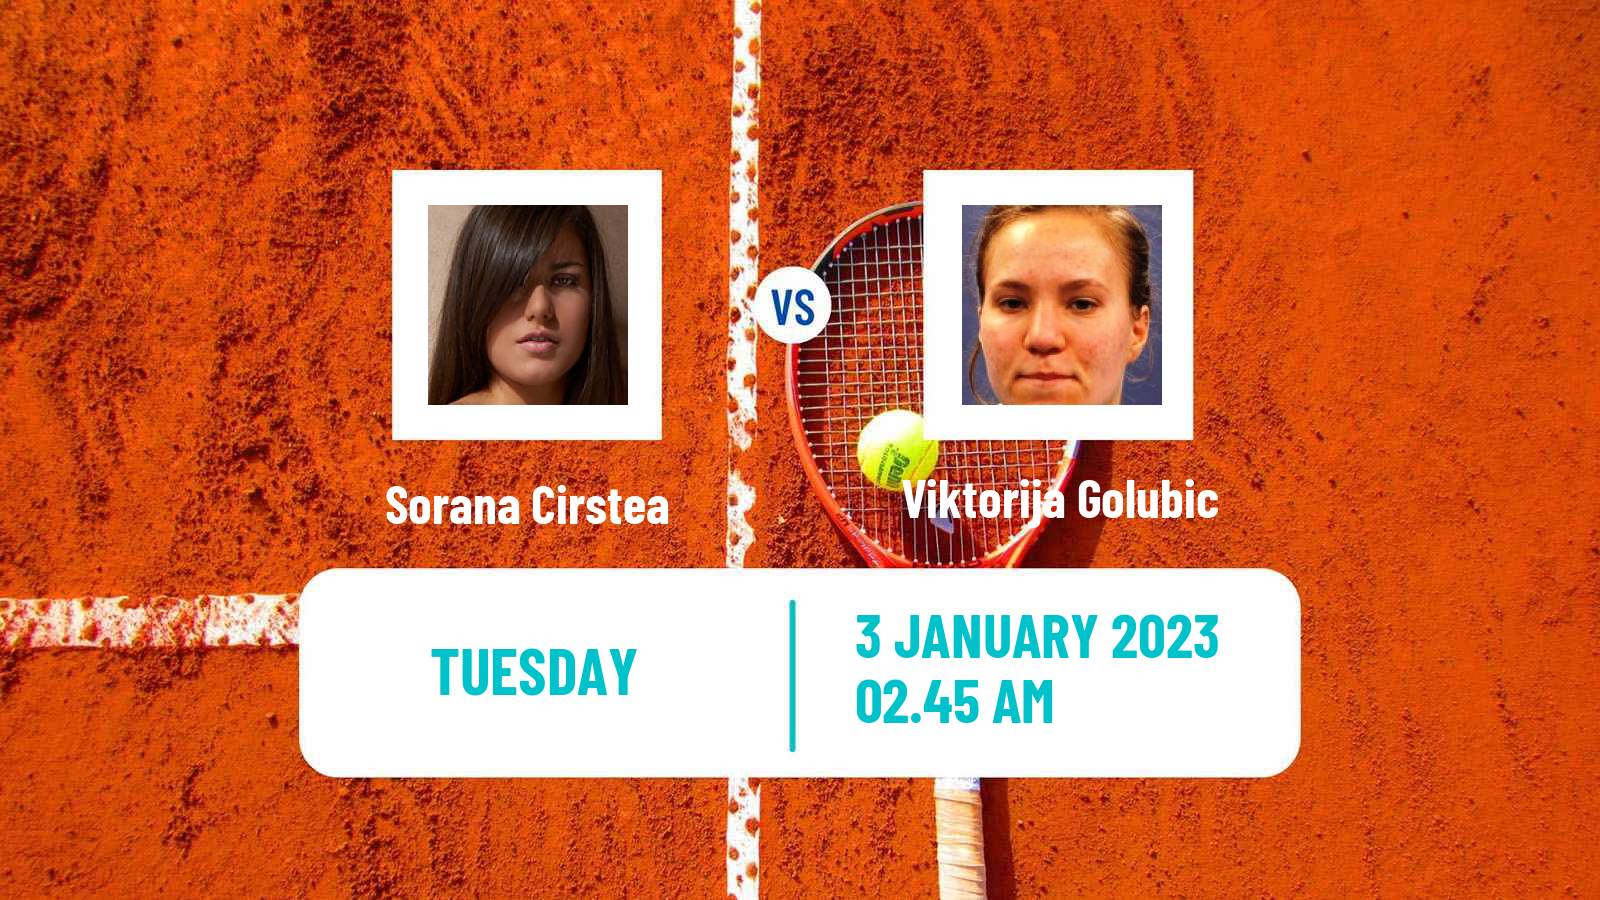 Tennis WTA Adelaide Sorana Cirstea - Viktorija Golubic